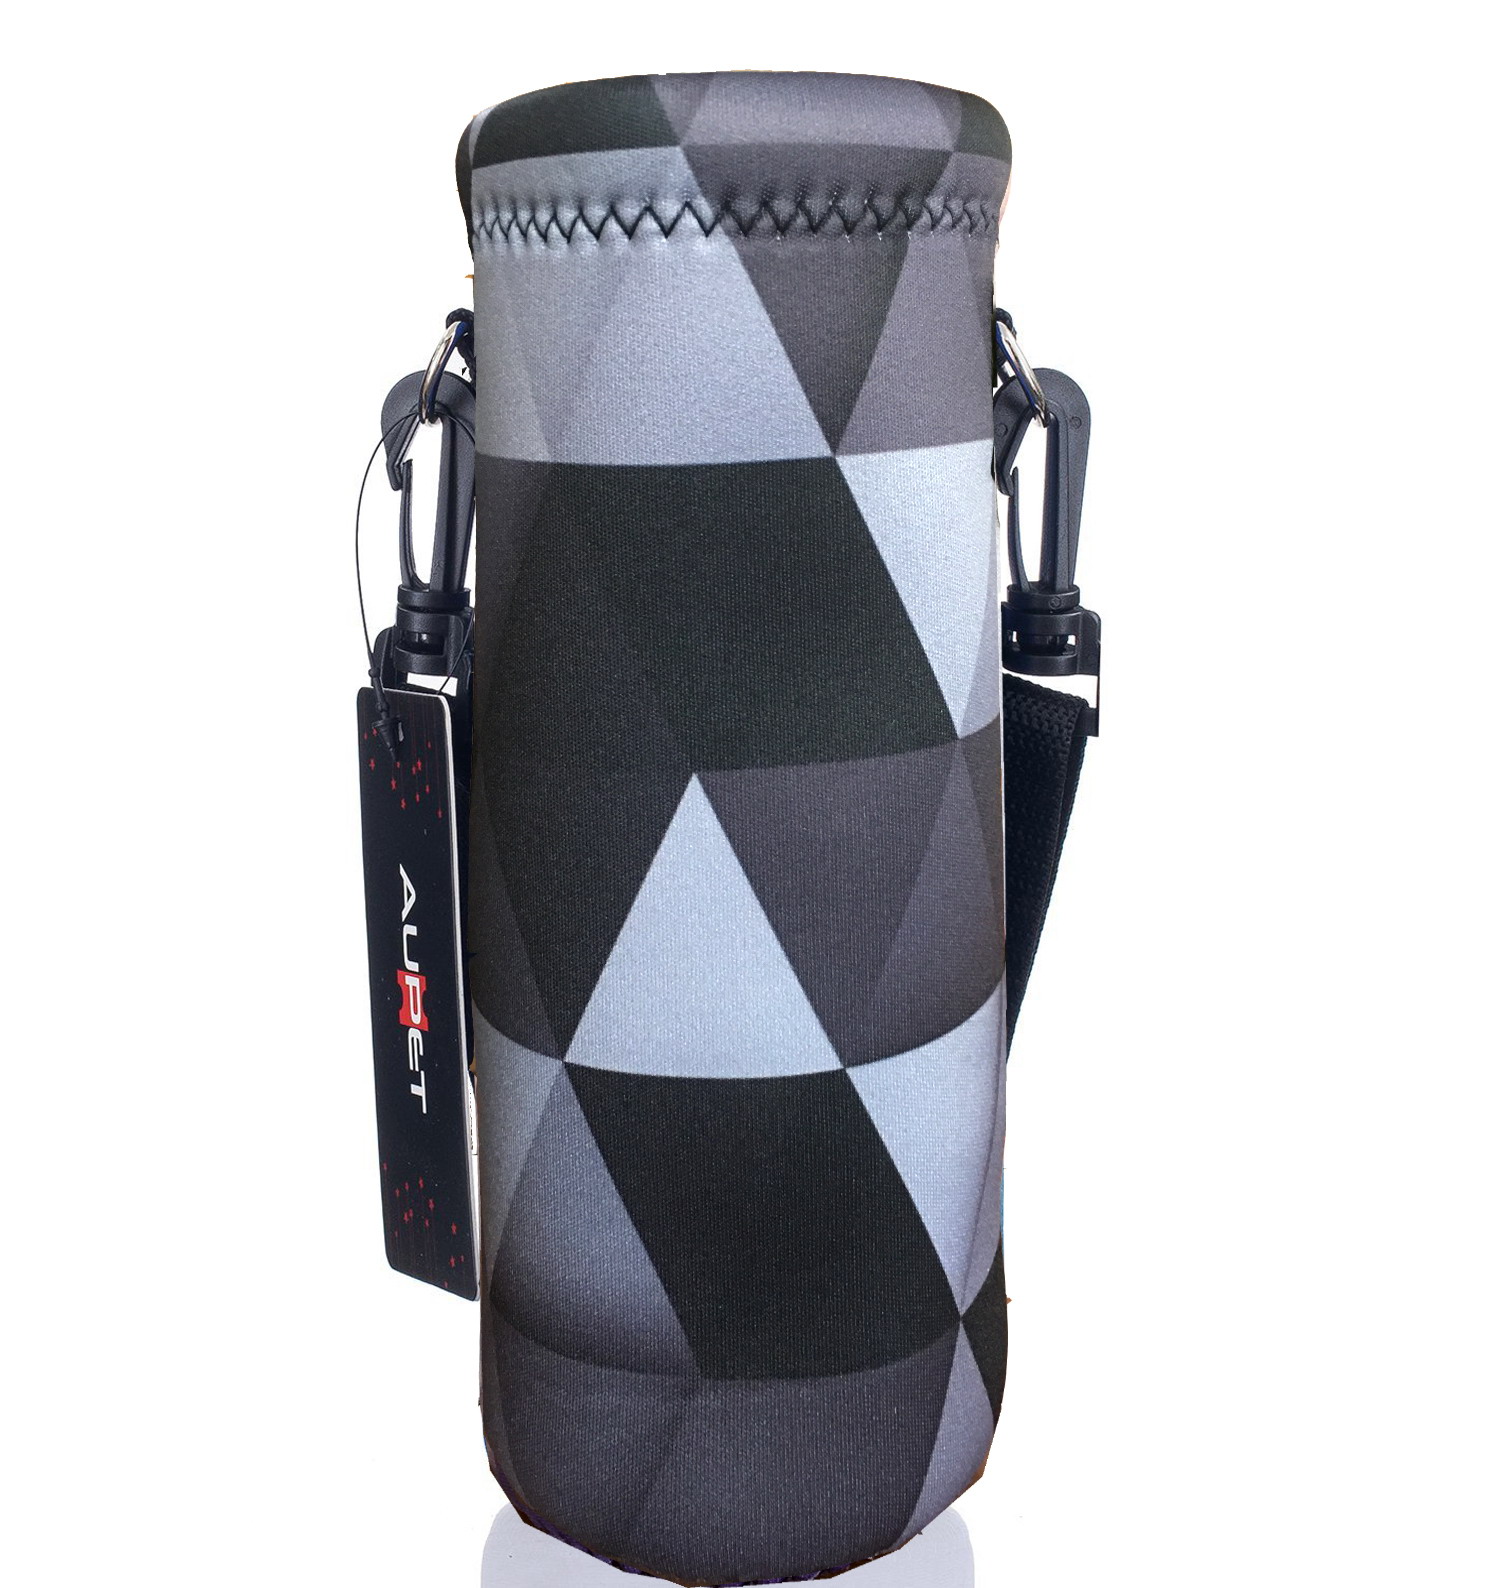 AUPET Water Bottle Carrier,Insulated Neoprene Water bottle Holder Bag Case Pouch Cover 1000ML or 750ML,Adjustable Shoulder Strap